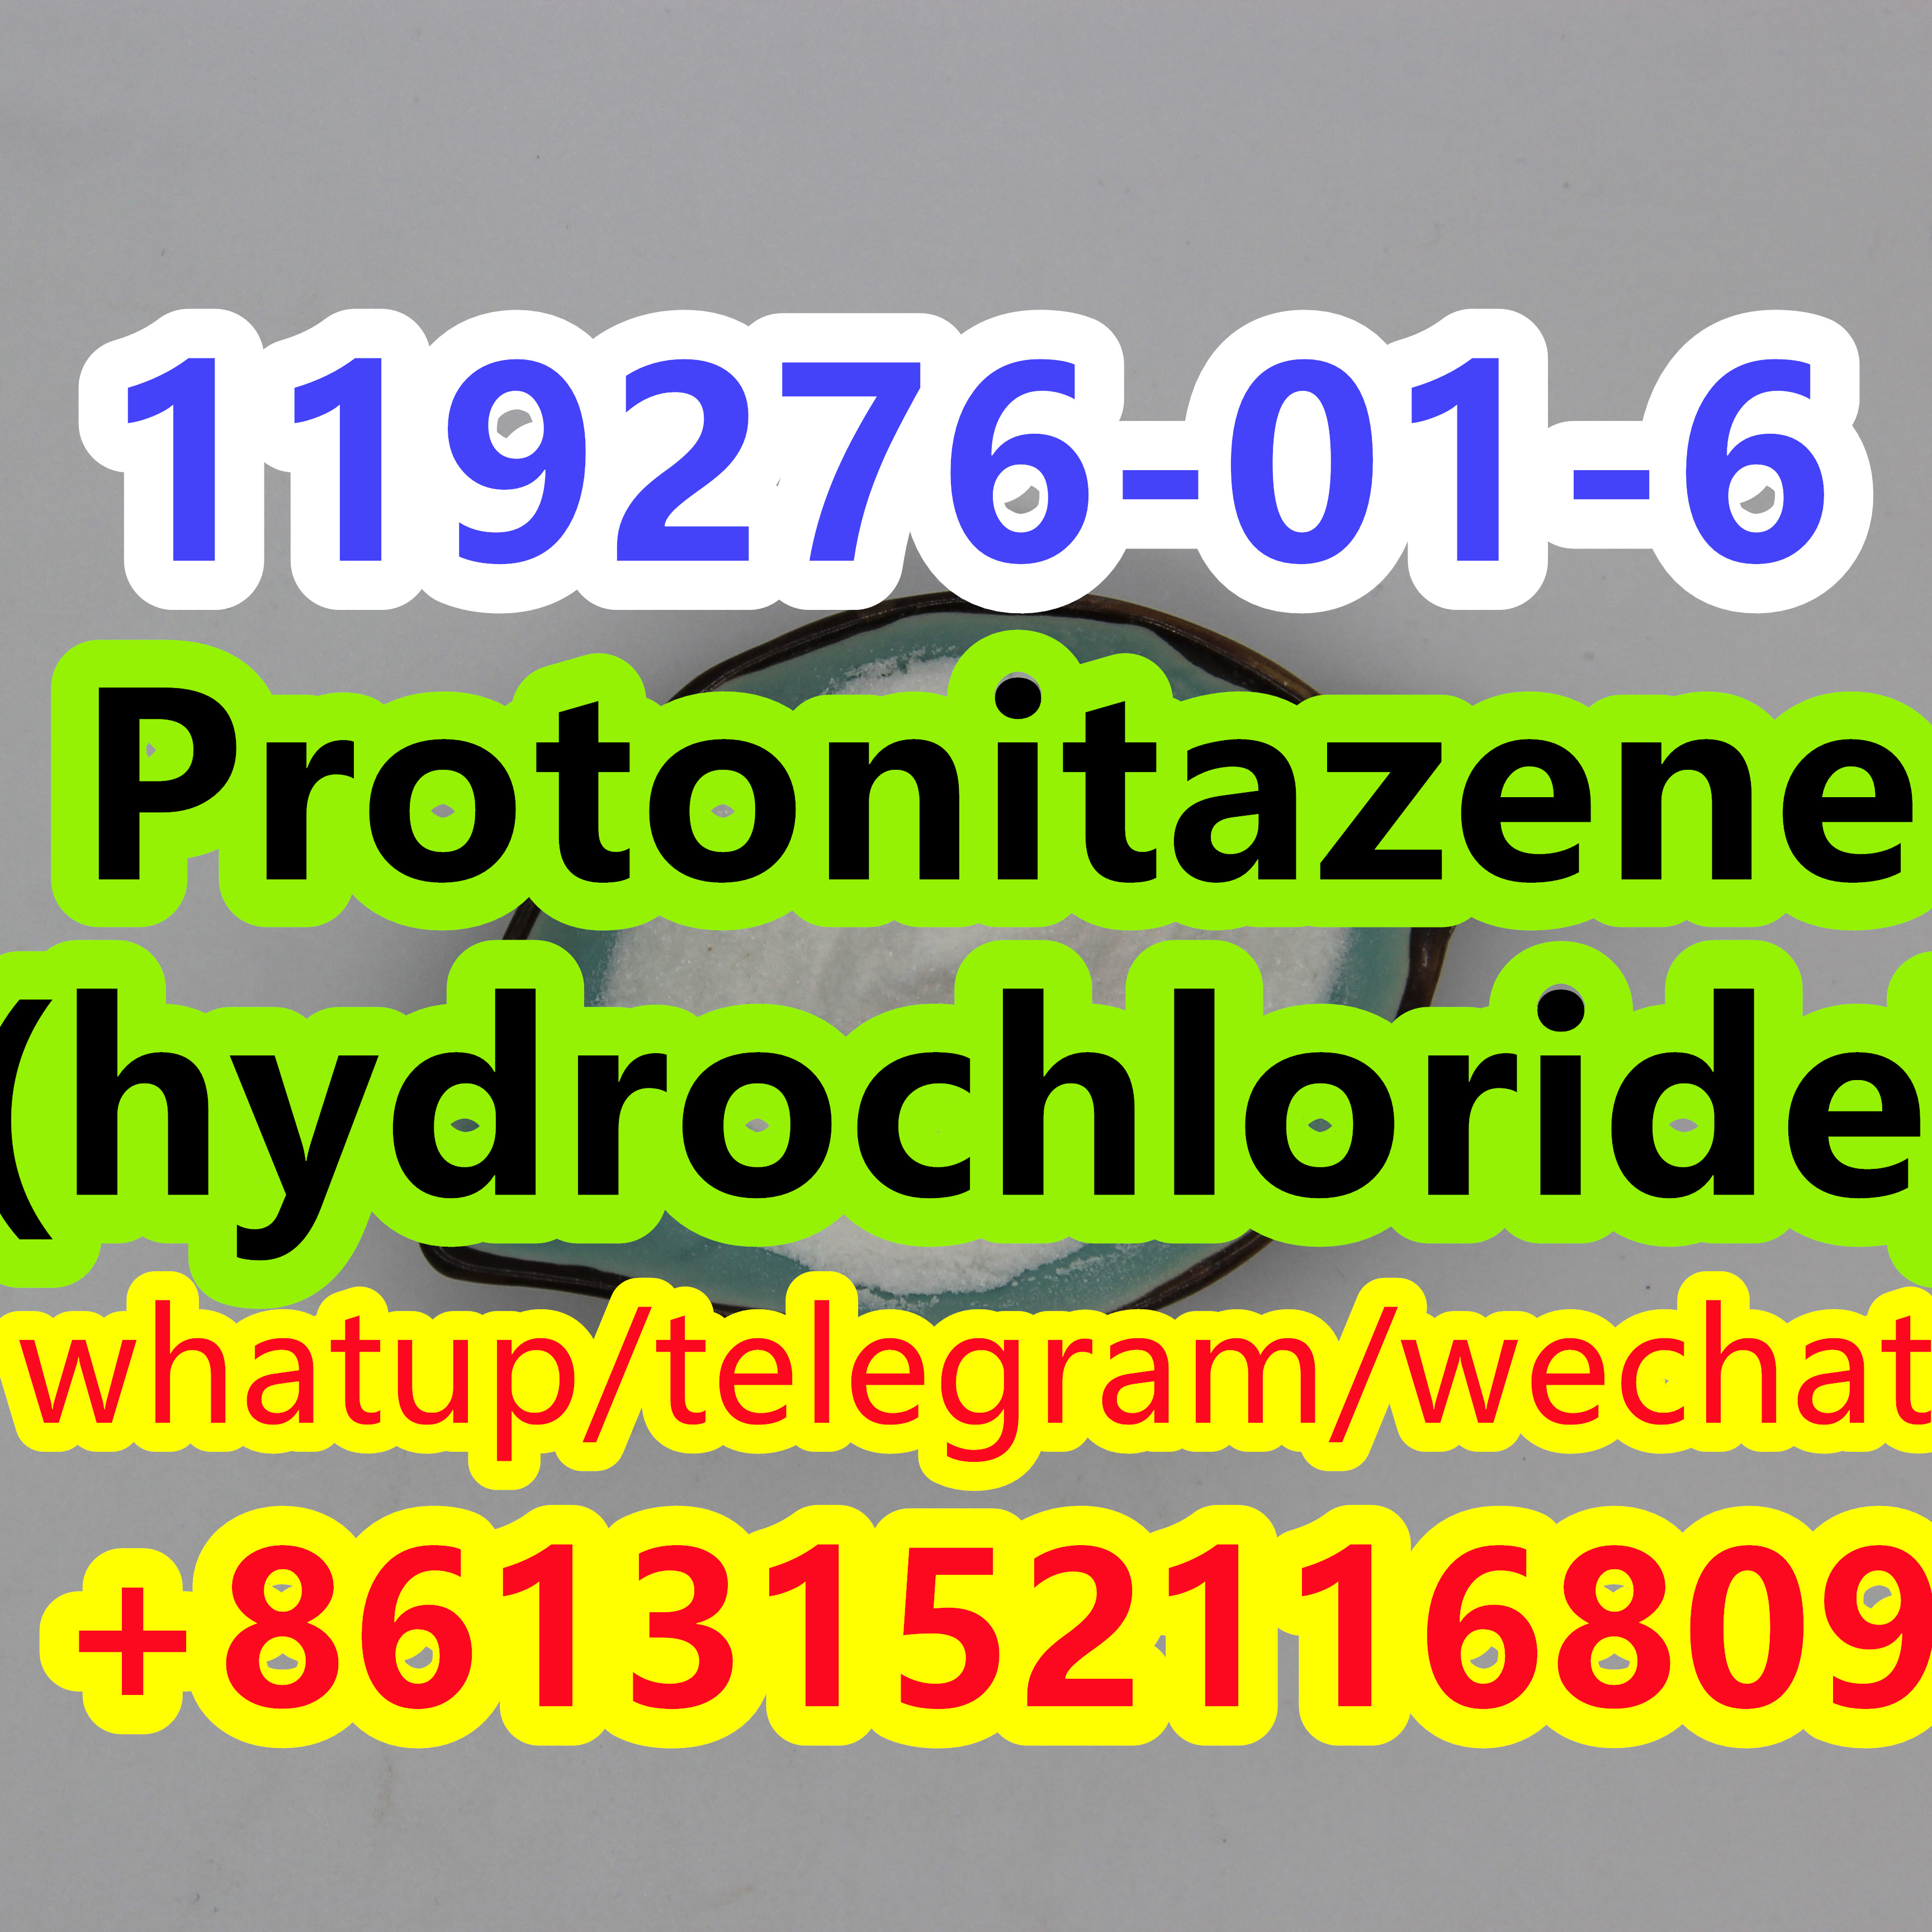 Overseas warehouse Protonitazene hydrochloride cas 119276-01-6 powder